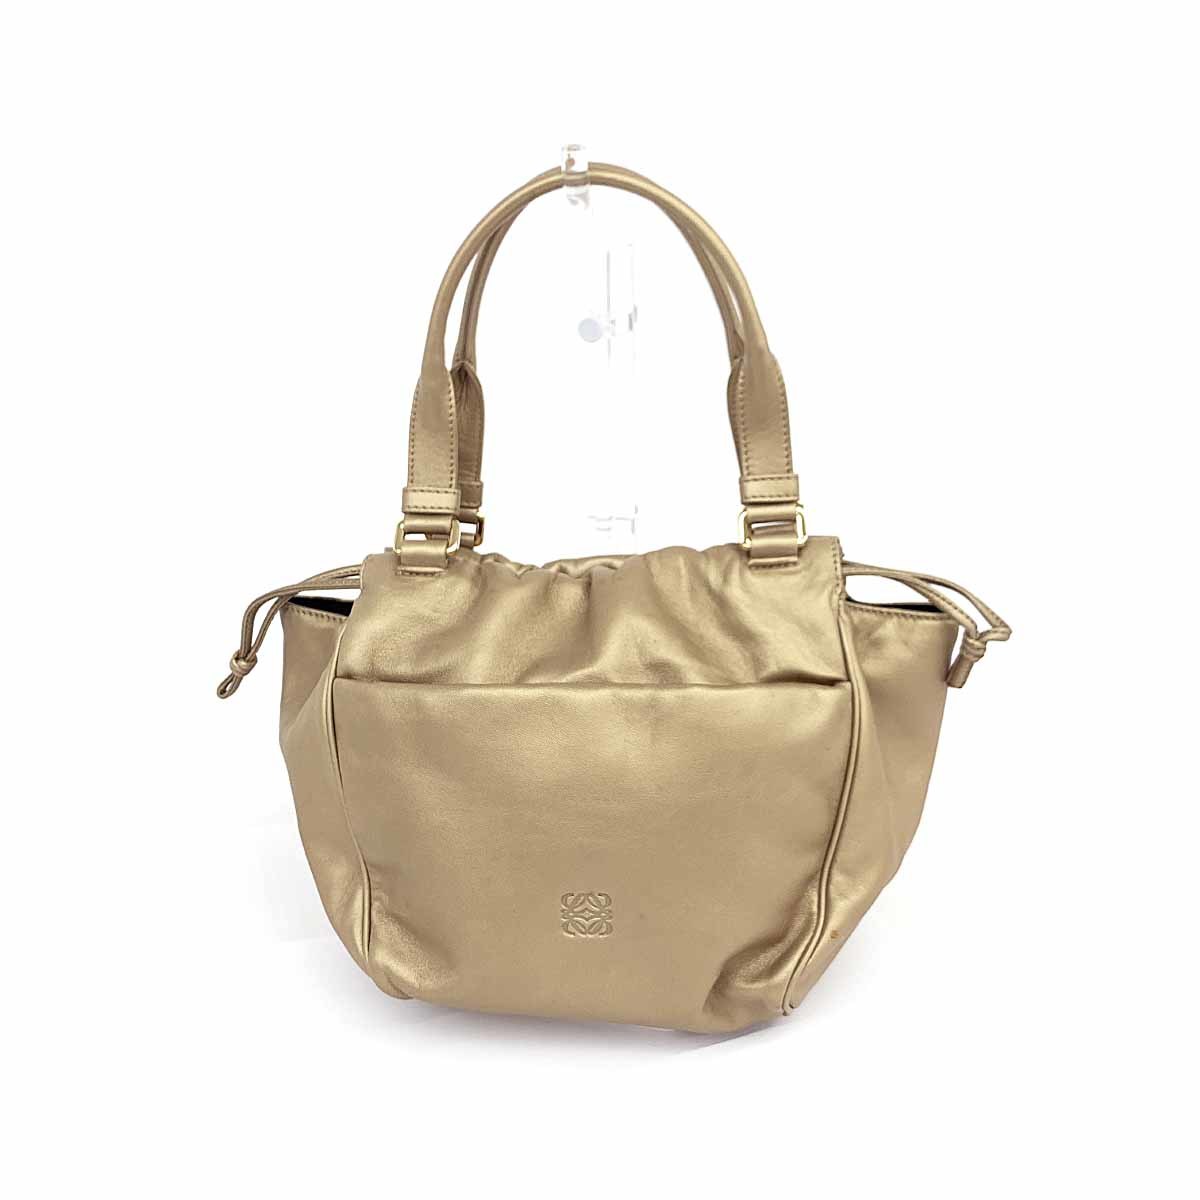 ◆LOEWE ロエベ トートバッグ◆ ゴールドカラー ナッパレザー アナグラム 巾着 ドローストリング レディース ハンド bag 鞄